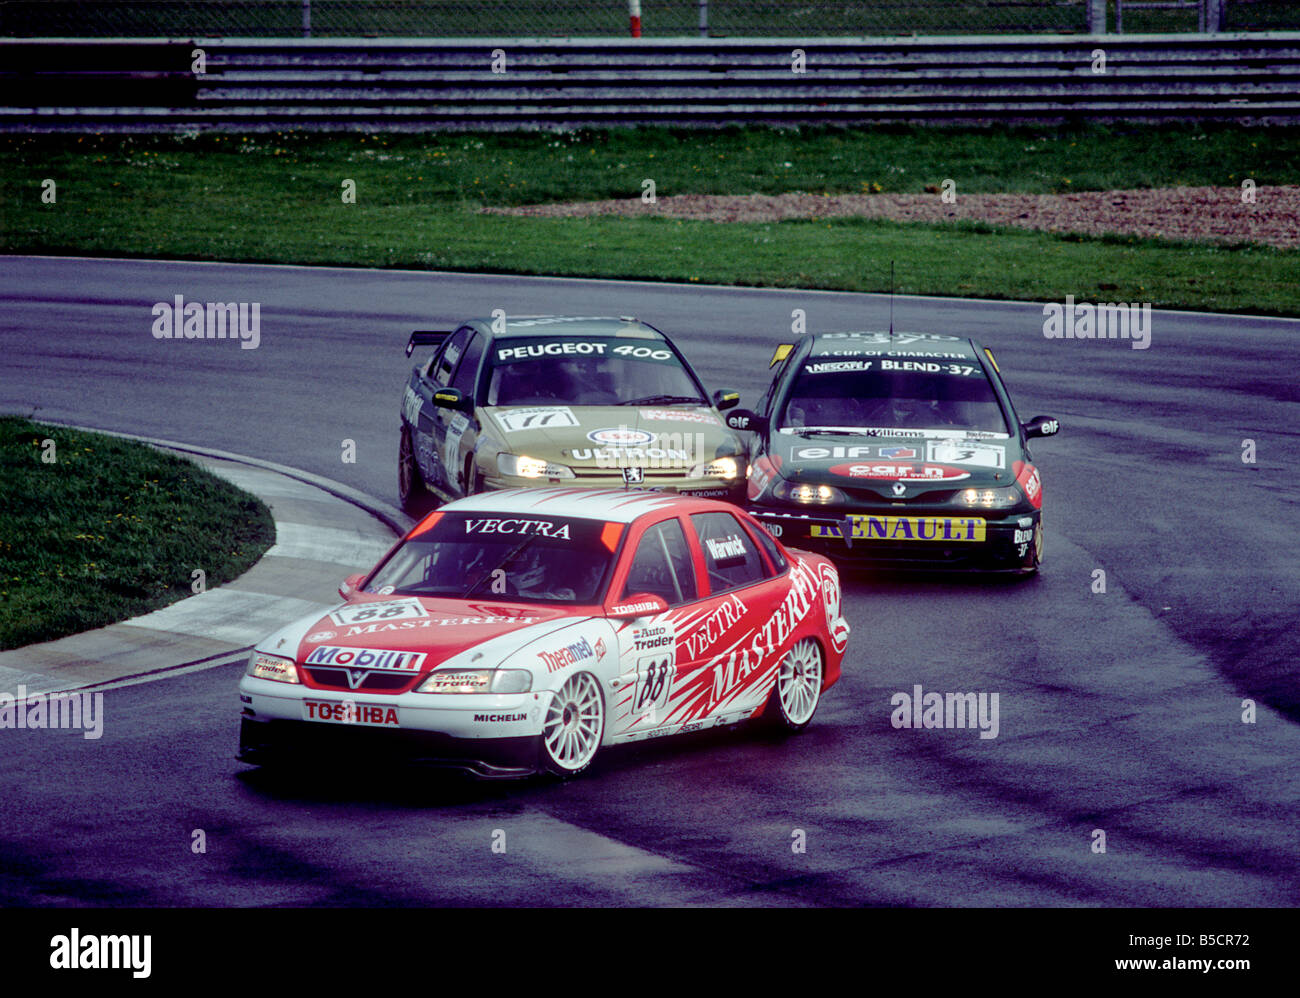 Derek Warwick Paul Radisich and Jason Plato British Touring car race Silverstone 26th April 1998 Stock Photo